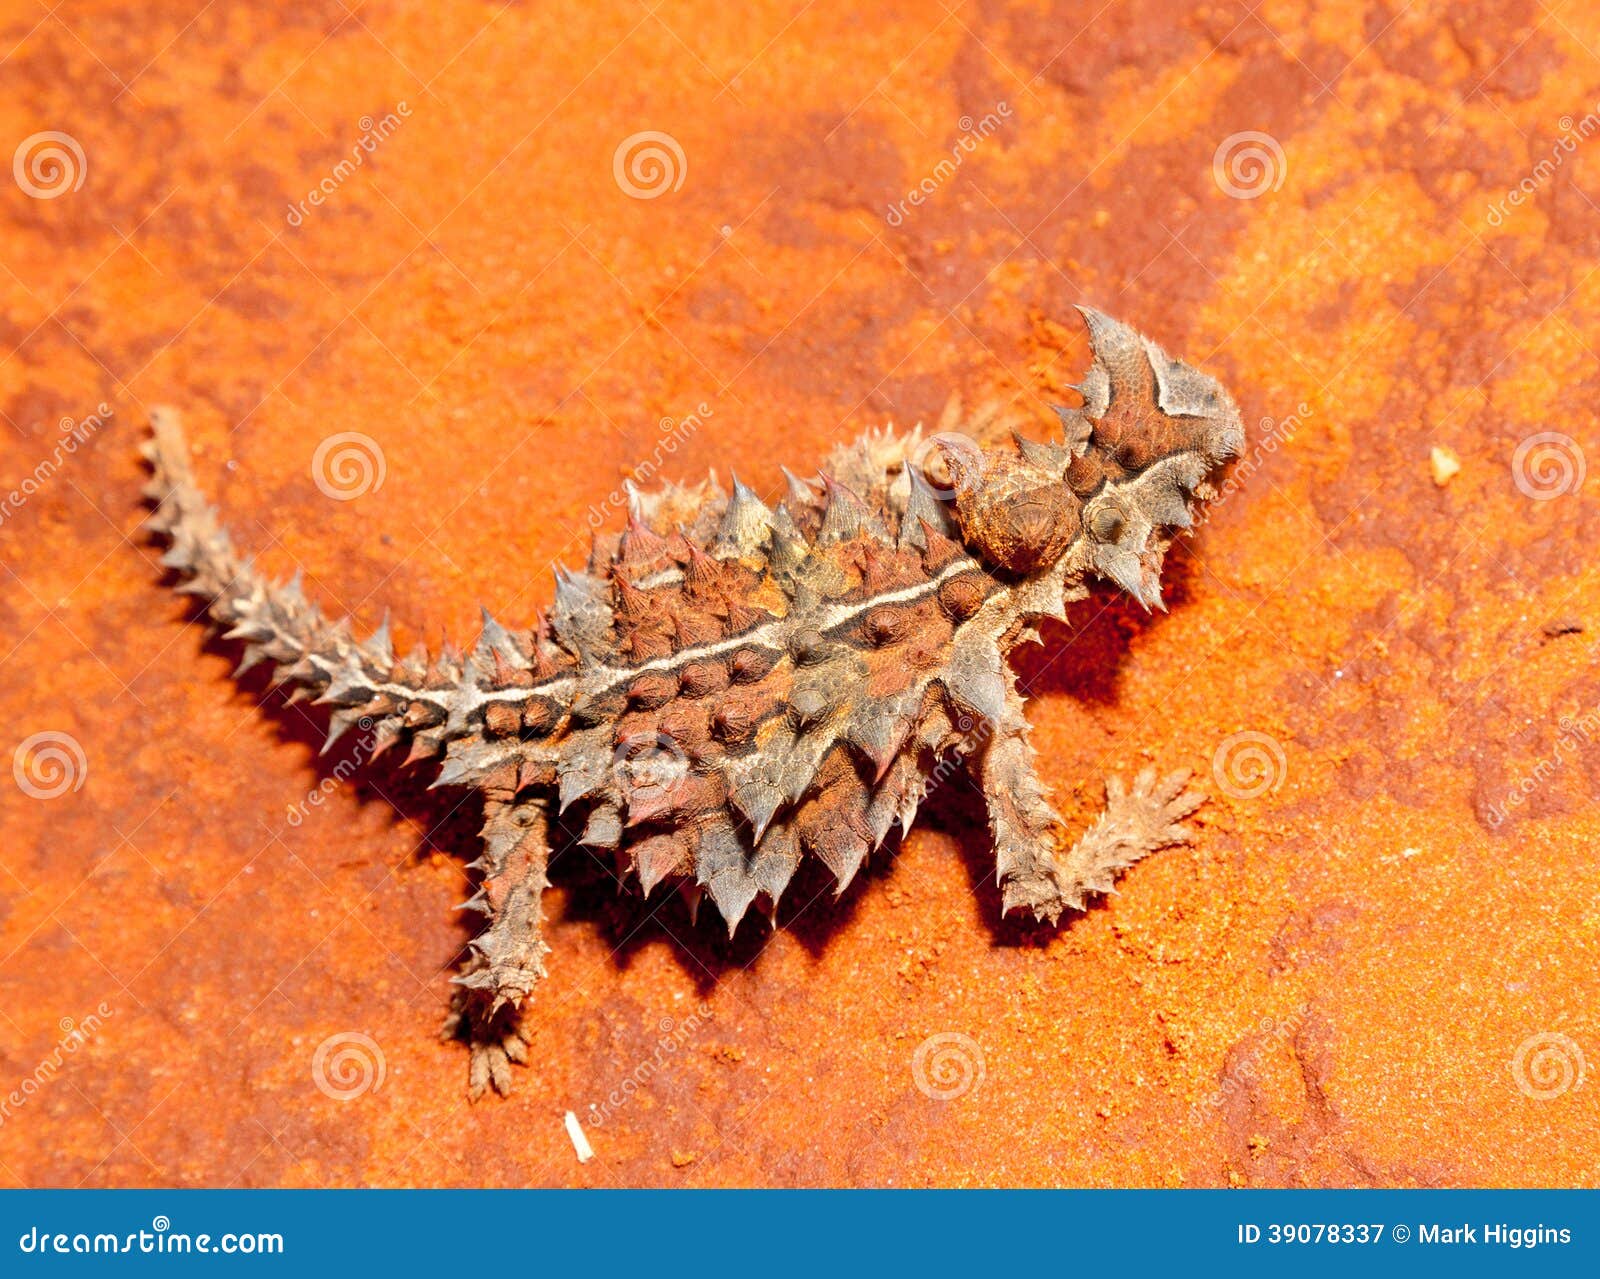 thorny devil lizard australia